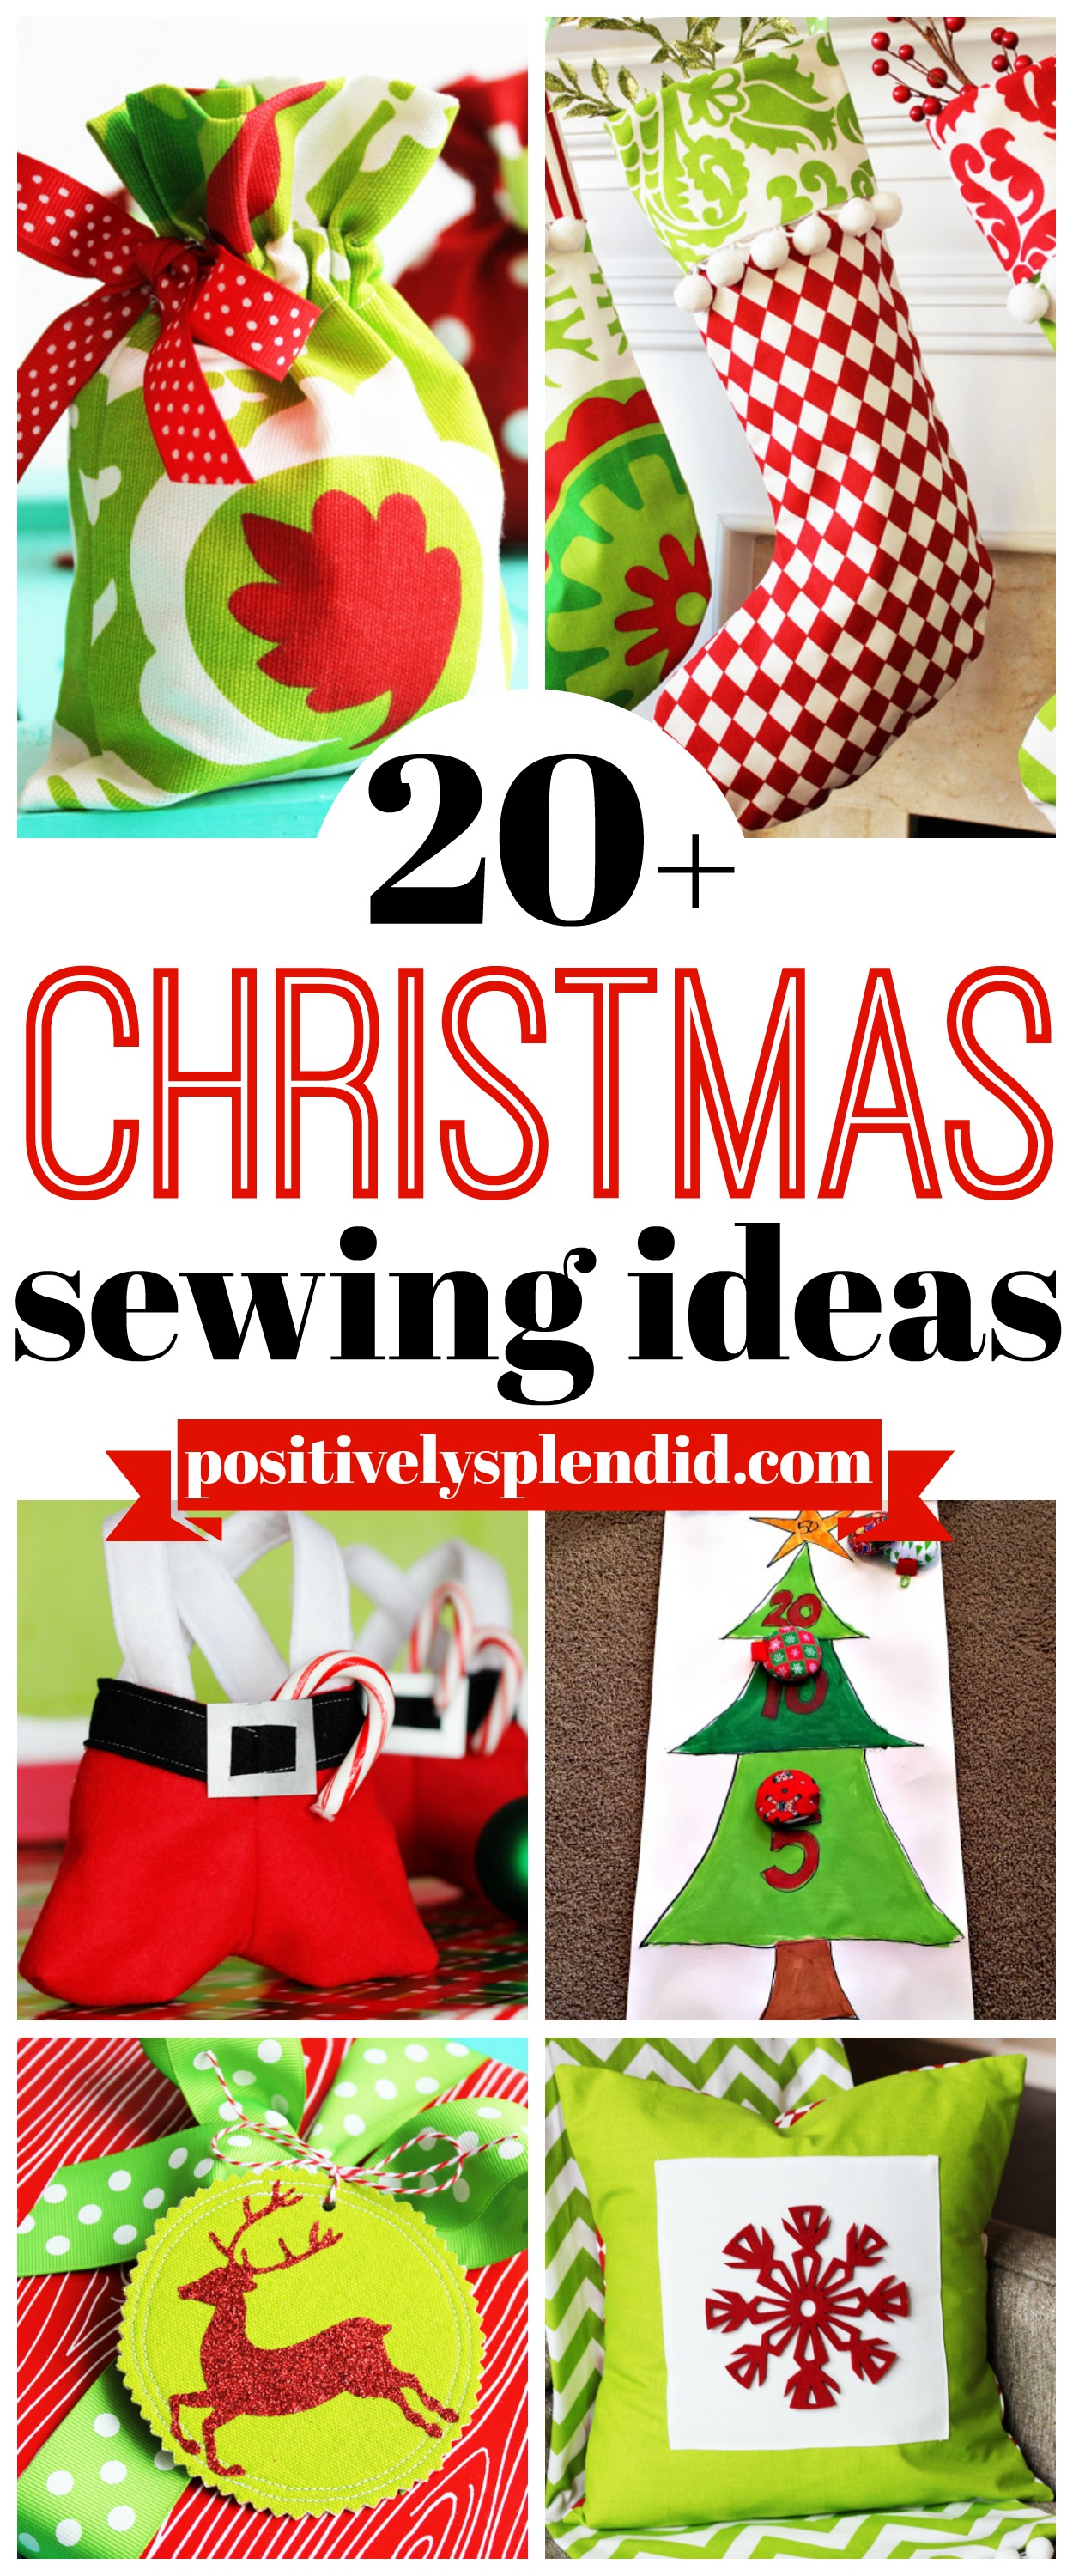 https://www.positivelysplendid.com/wp-content/uploads/2018/11/Christmas-Sewing-Ideas.jpg